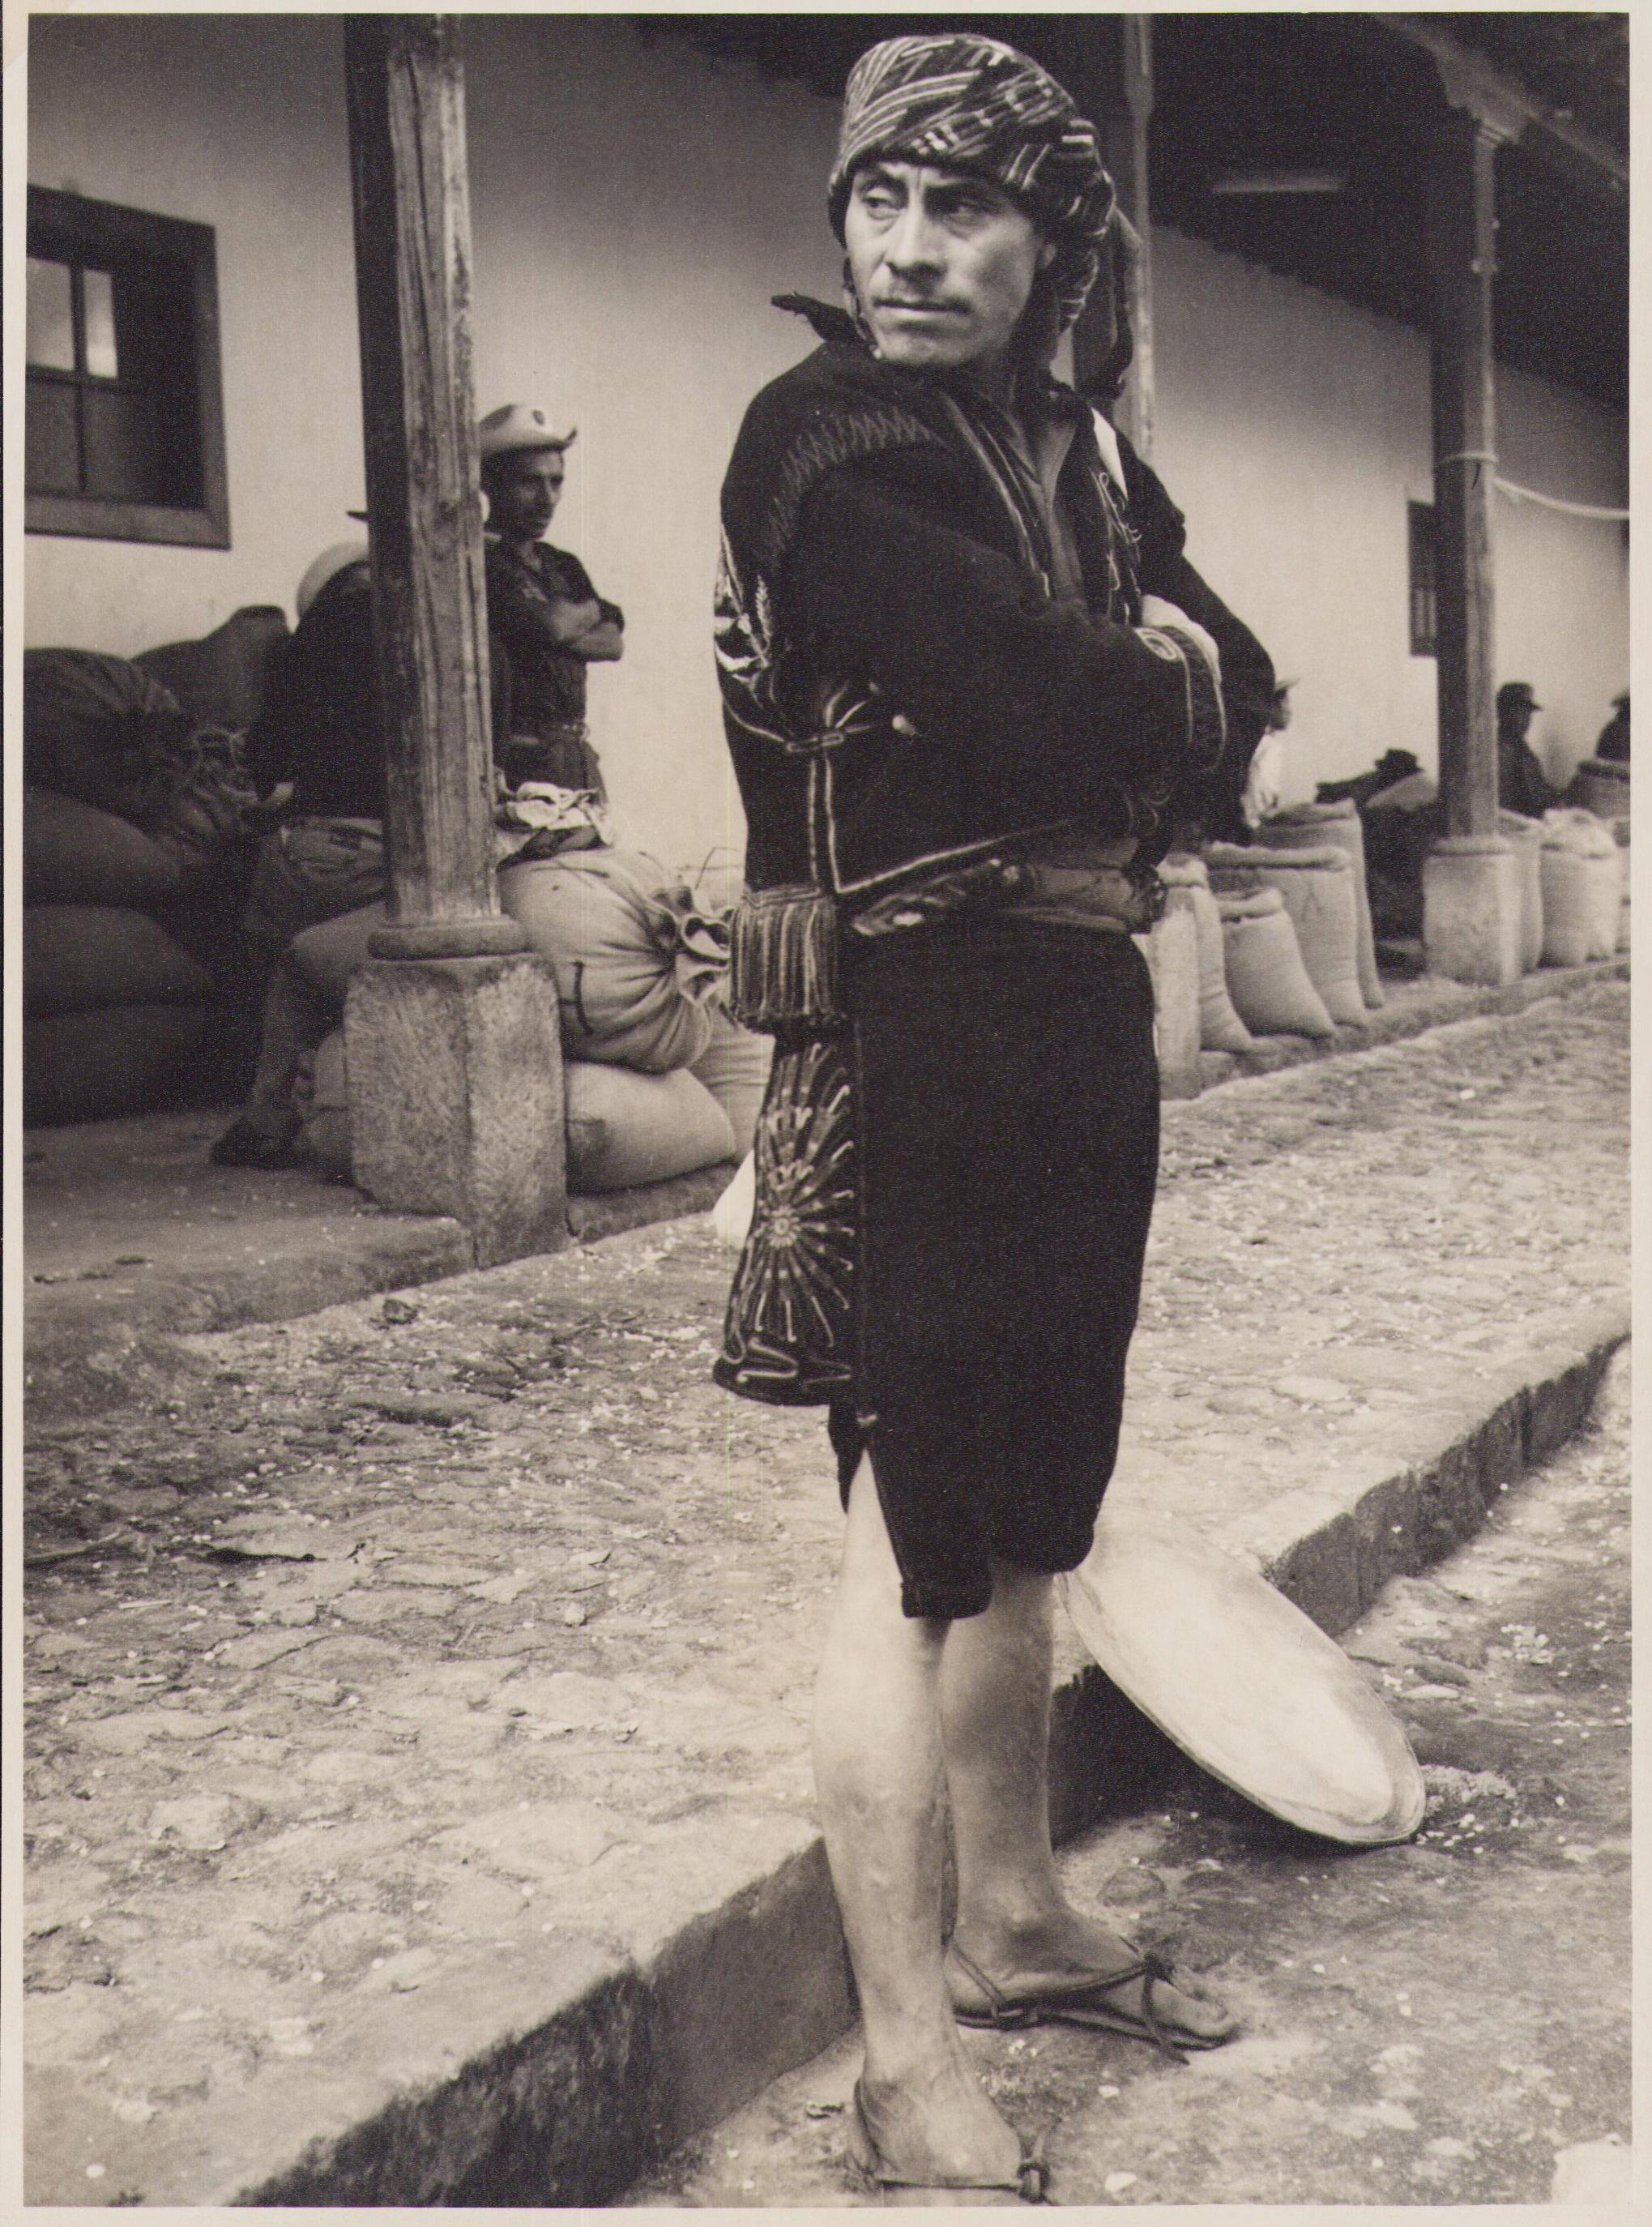 Guatemala, Man, Black and White Photography, ca. 1960s, 23, 1 x 17, 1 cm